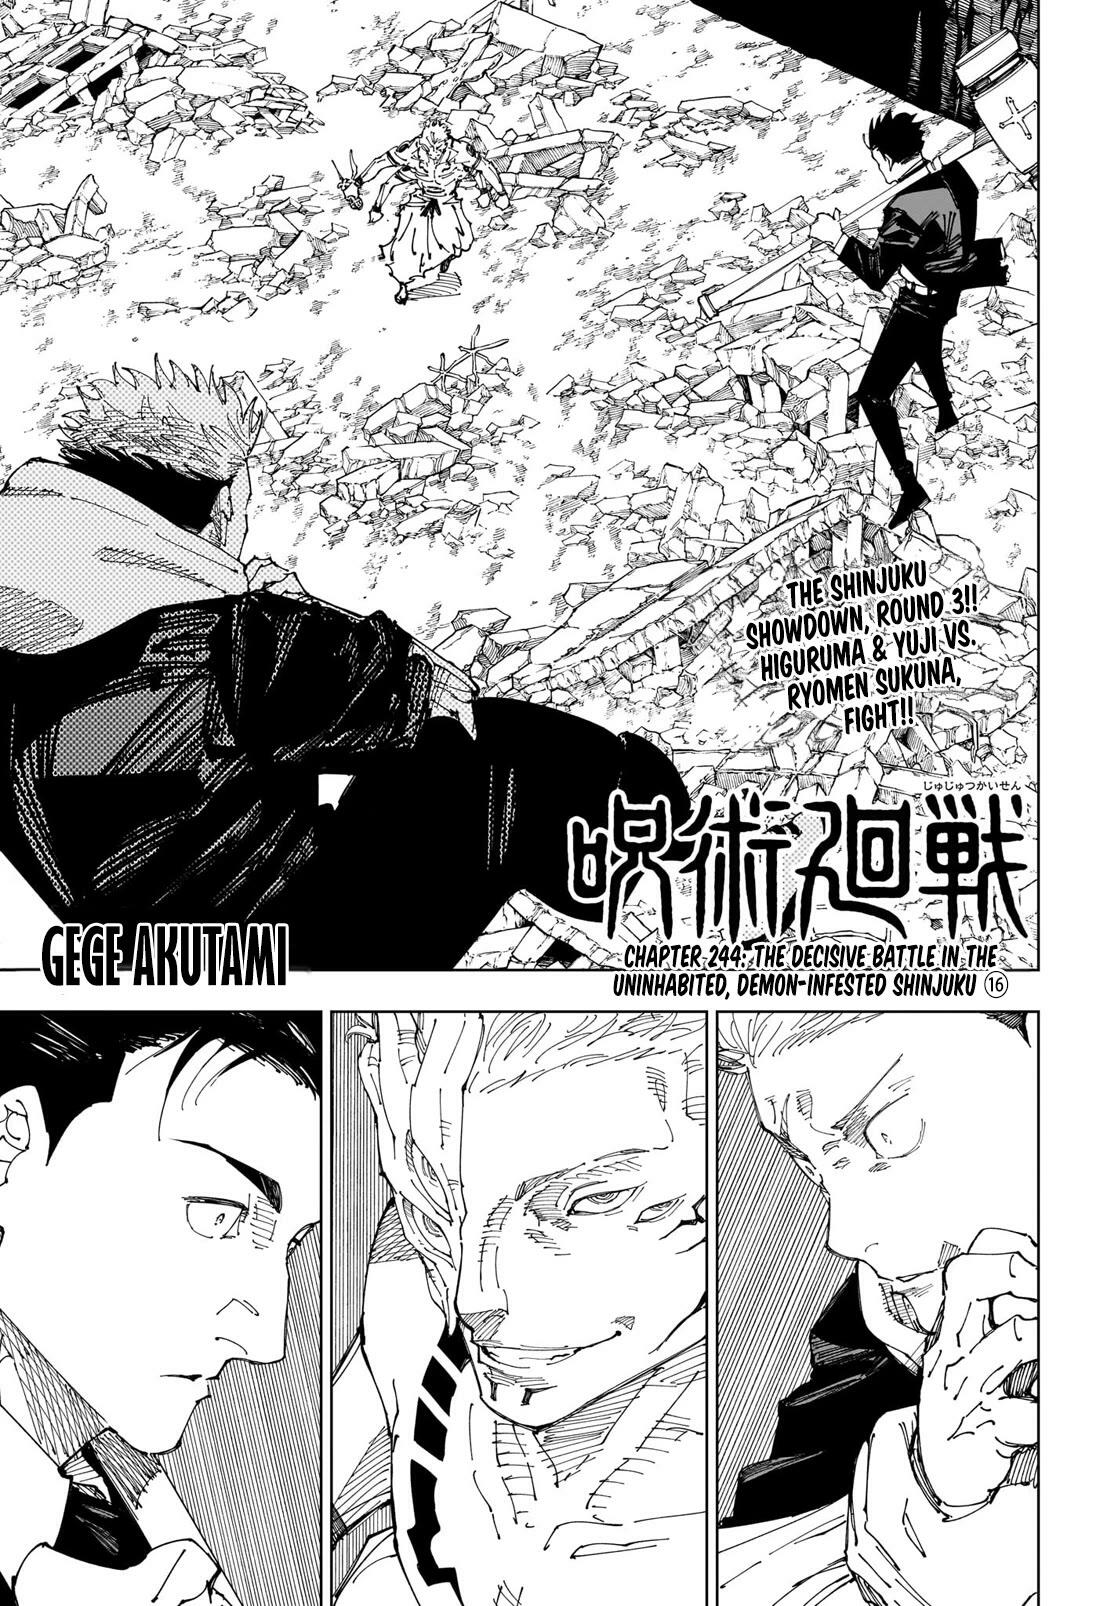 Jujutsu Kaisen Chapter 244: The Decisive Battle In The Uninhabited, Demon-Infested Shinjuku ⑯ page 1 - Mangakakalot